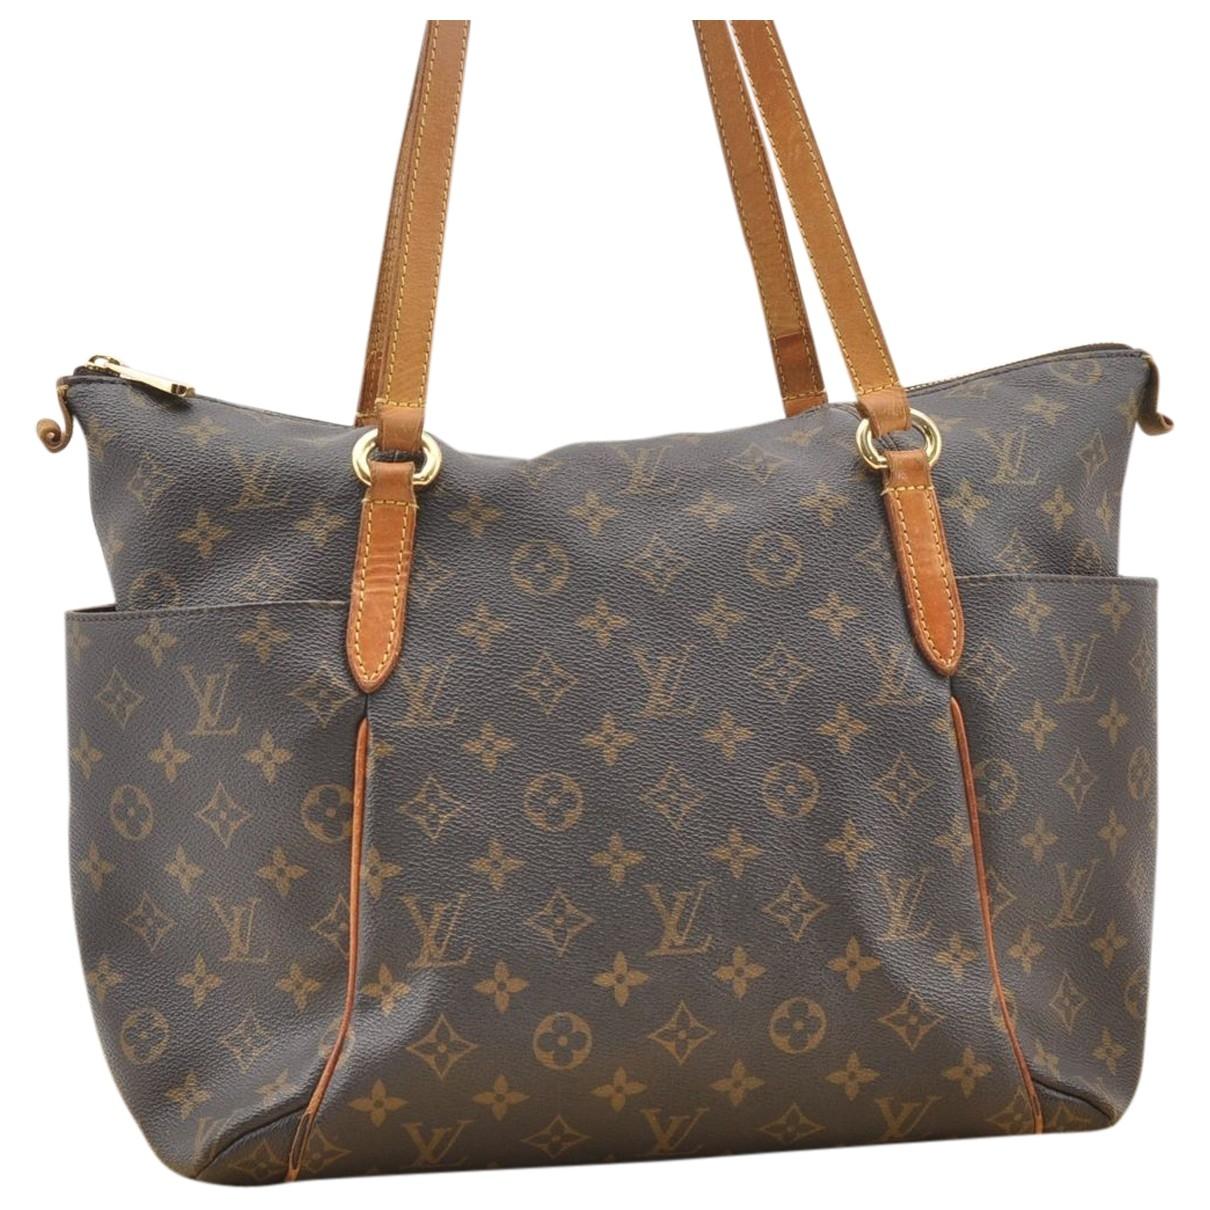 Lyst - Louis Vuitton Totally Brown Cloth Handbag in Brown - Save 26%